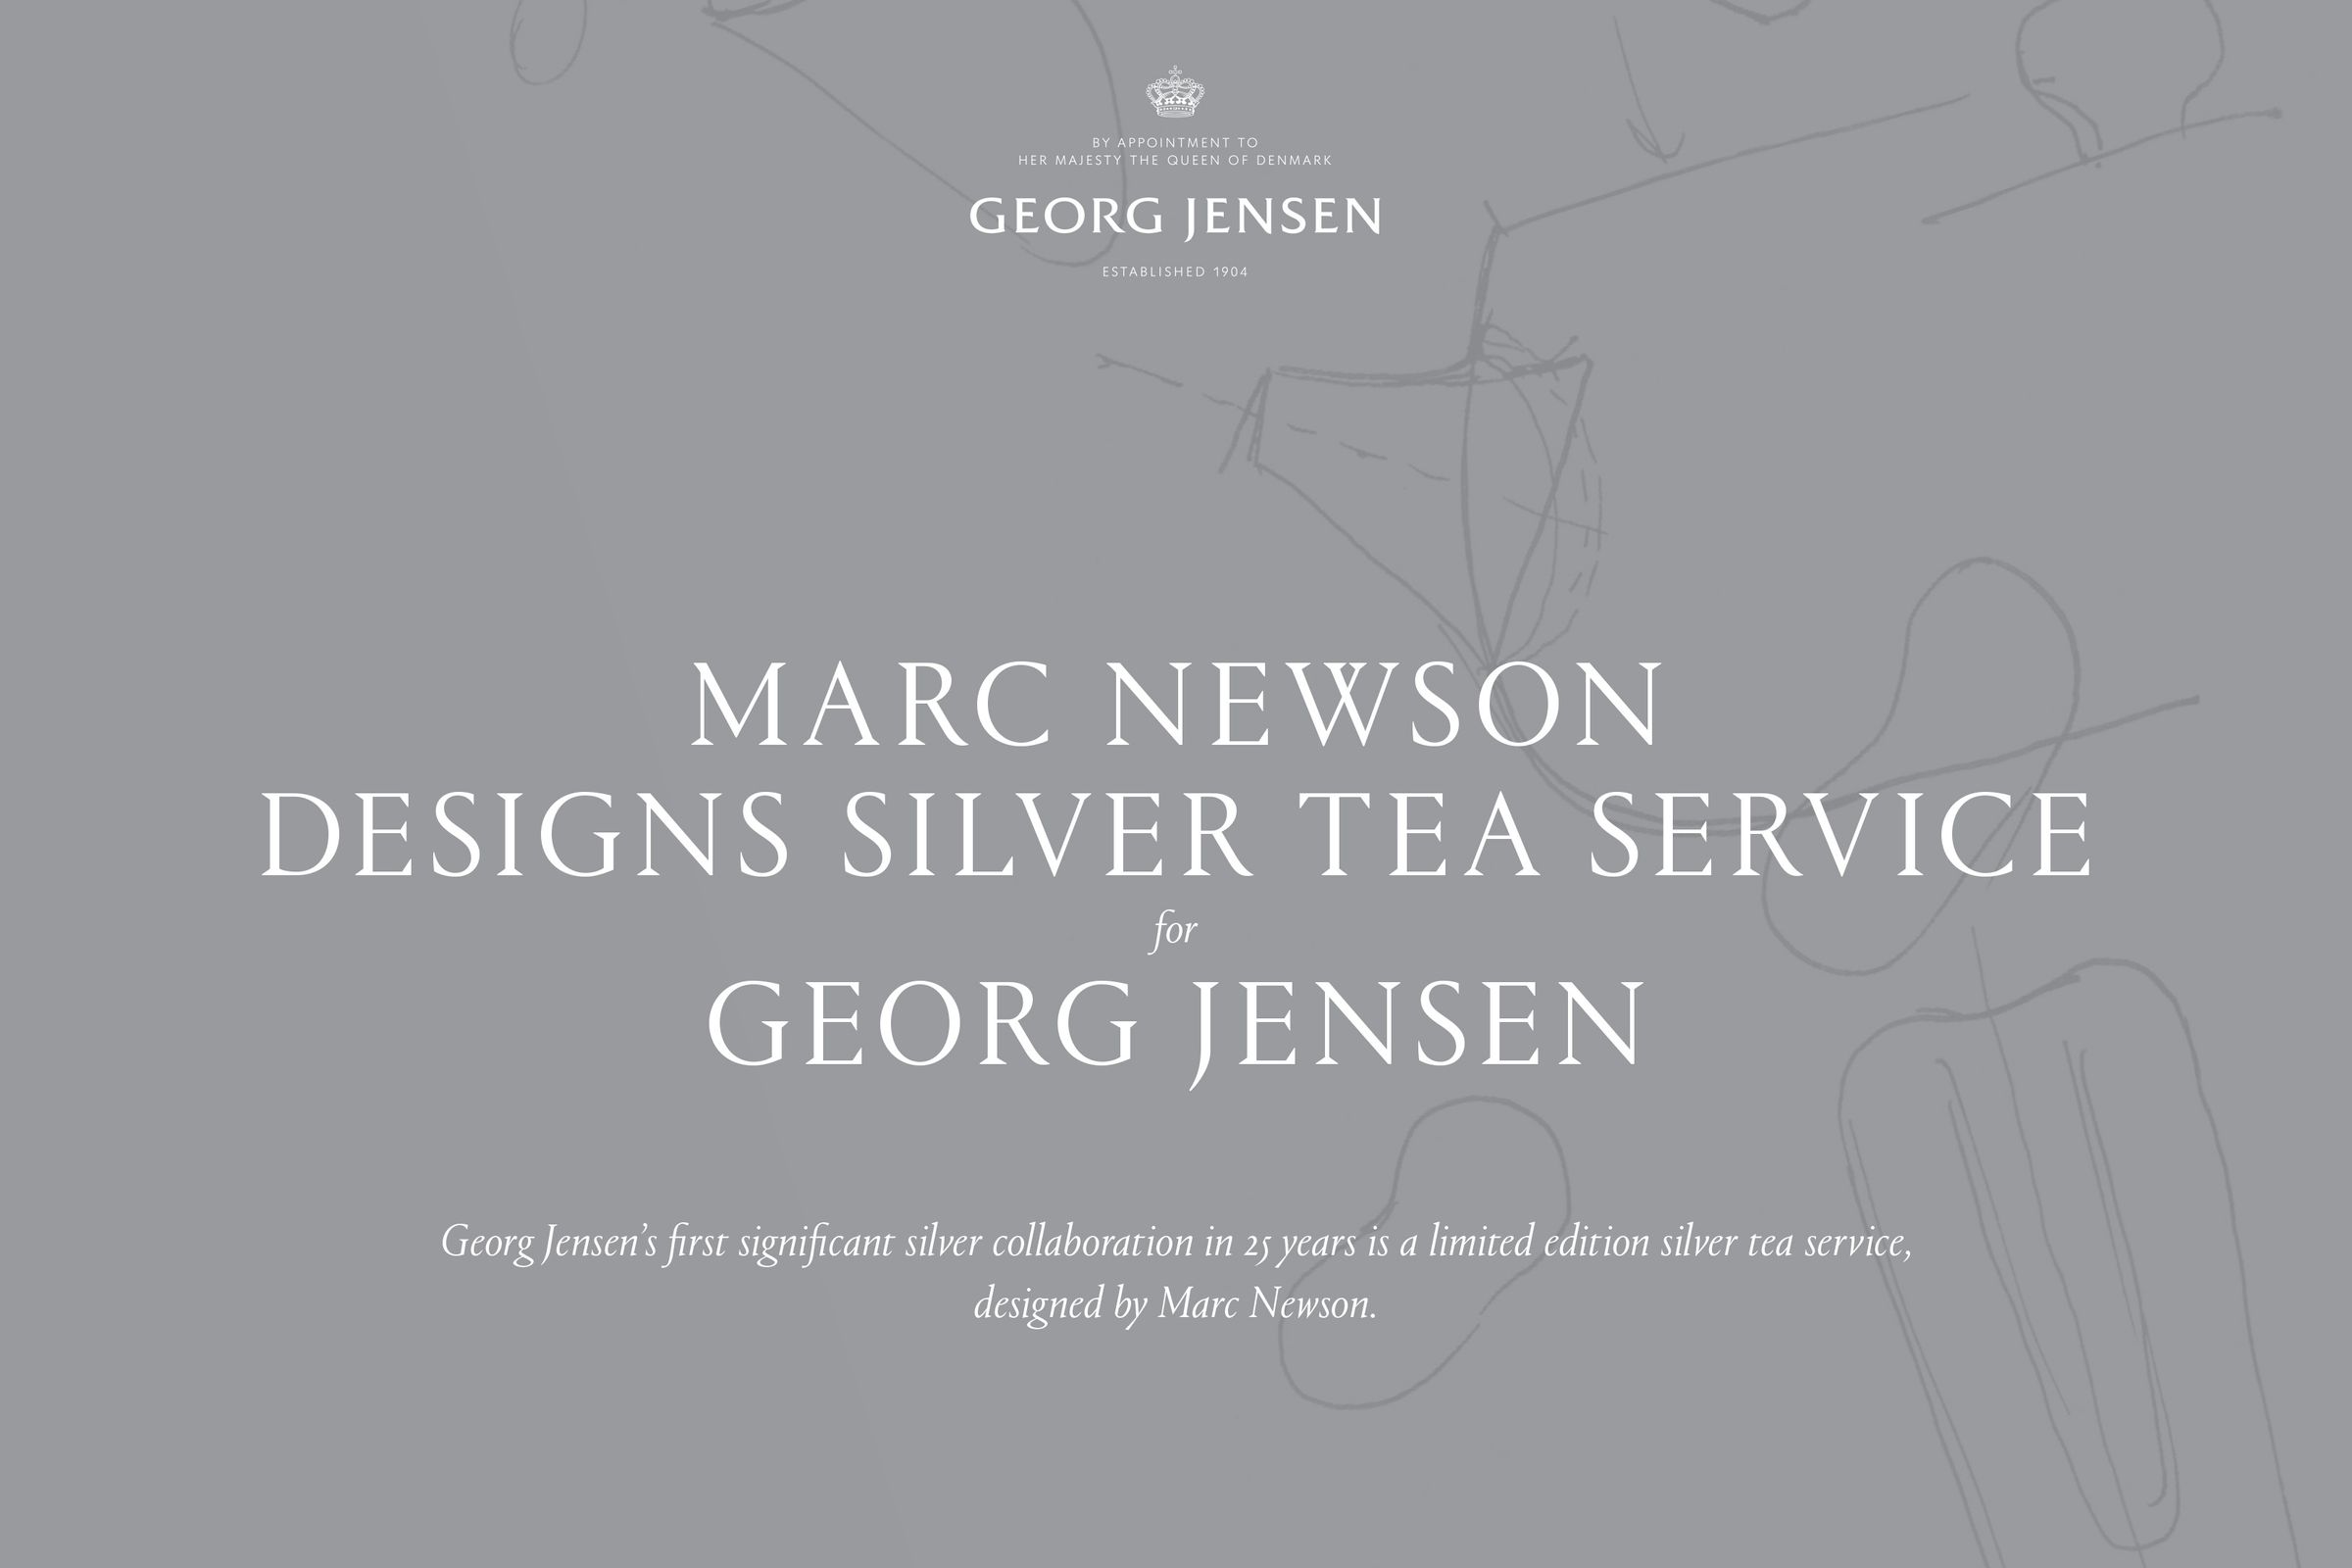 Georg Jensen Marc Newson collaboration art direction